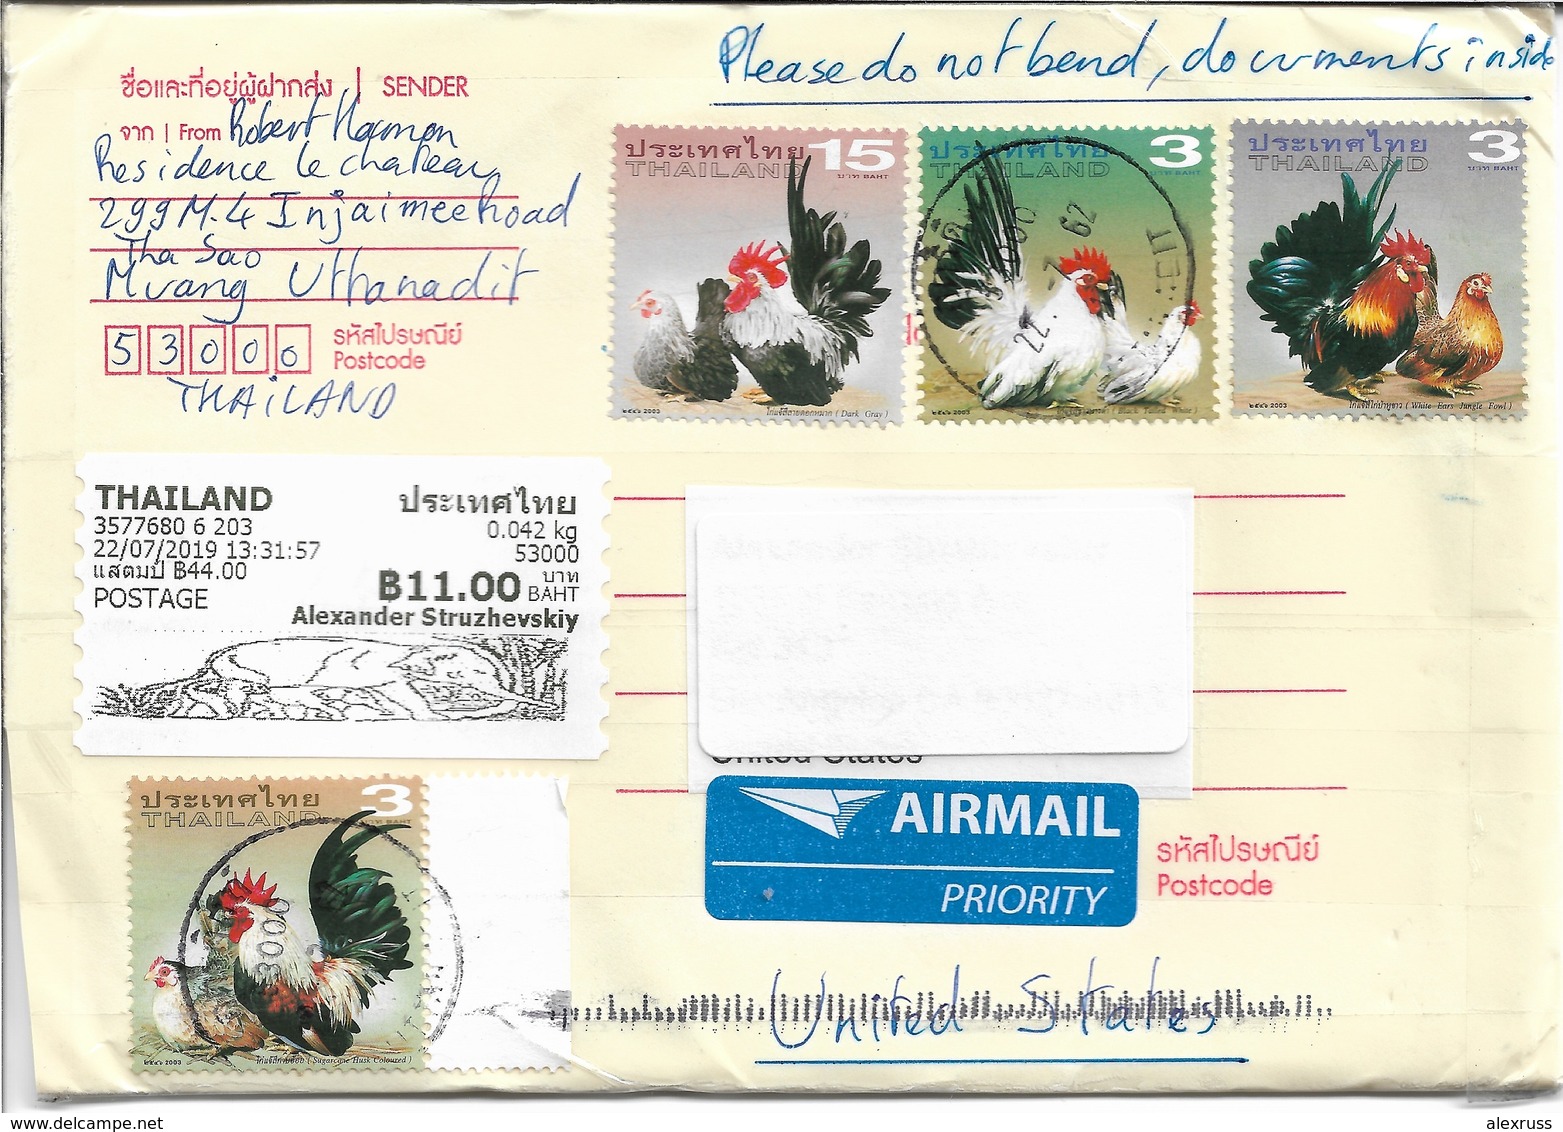 Thailand Birds 2003 Roosters, 2013 Owls Souvenir Sheet, VF Post Cover (RN-50) - Thailand